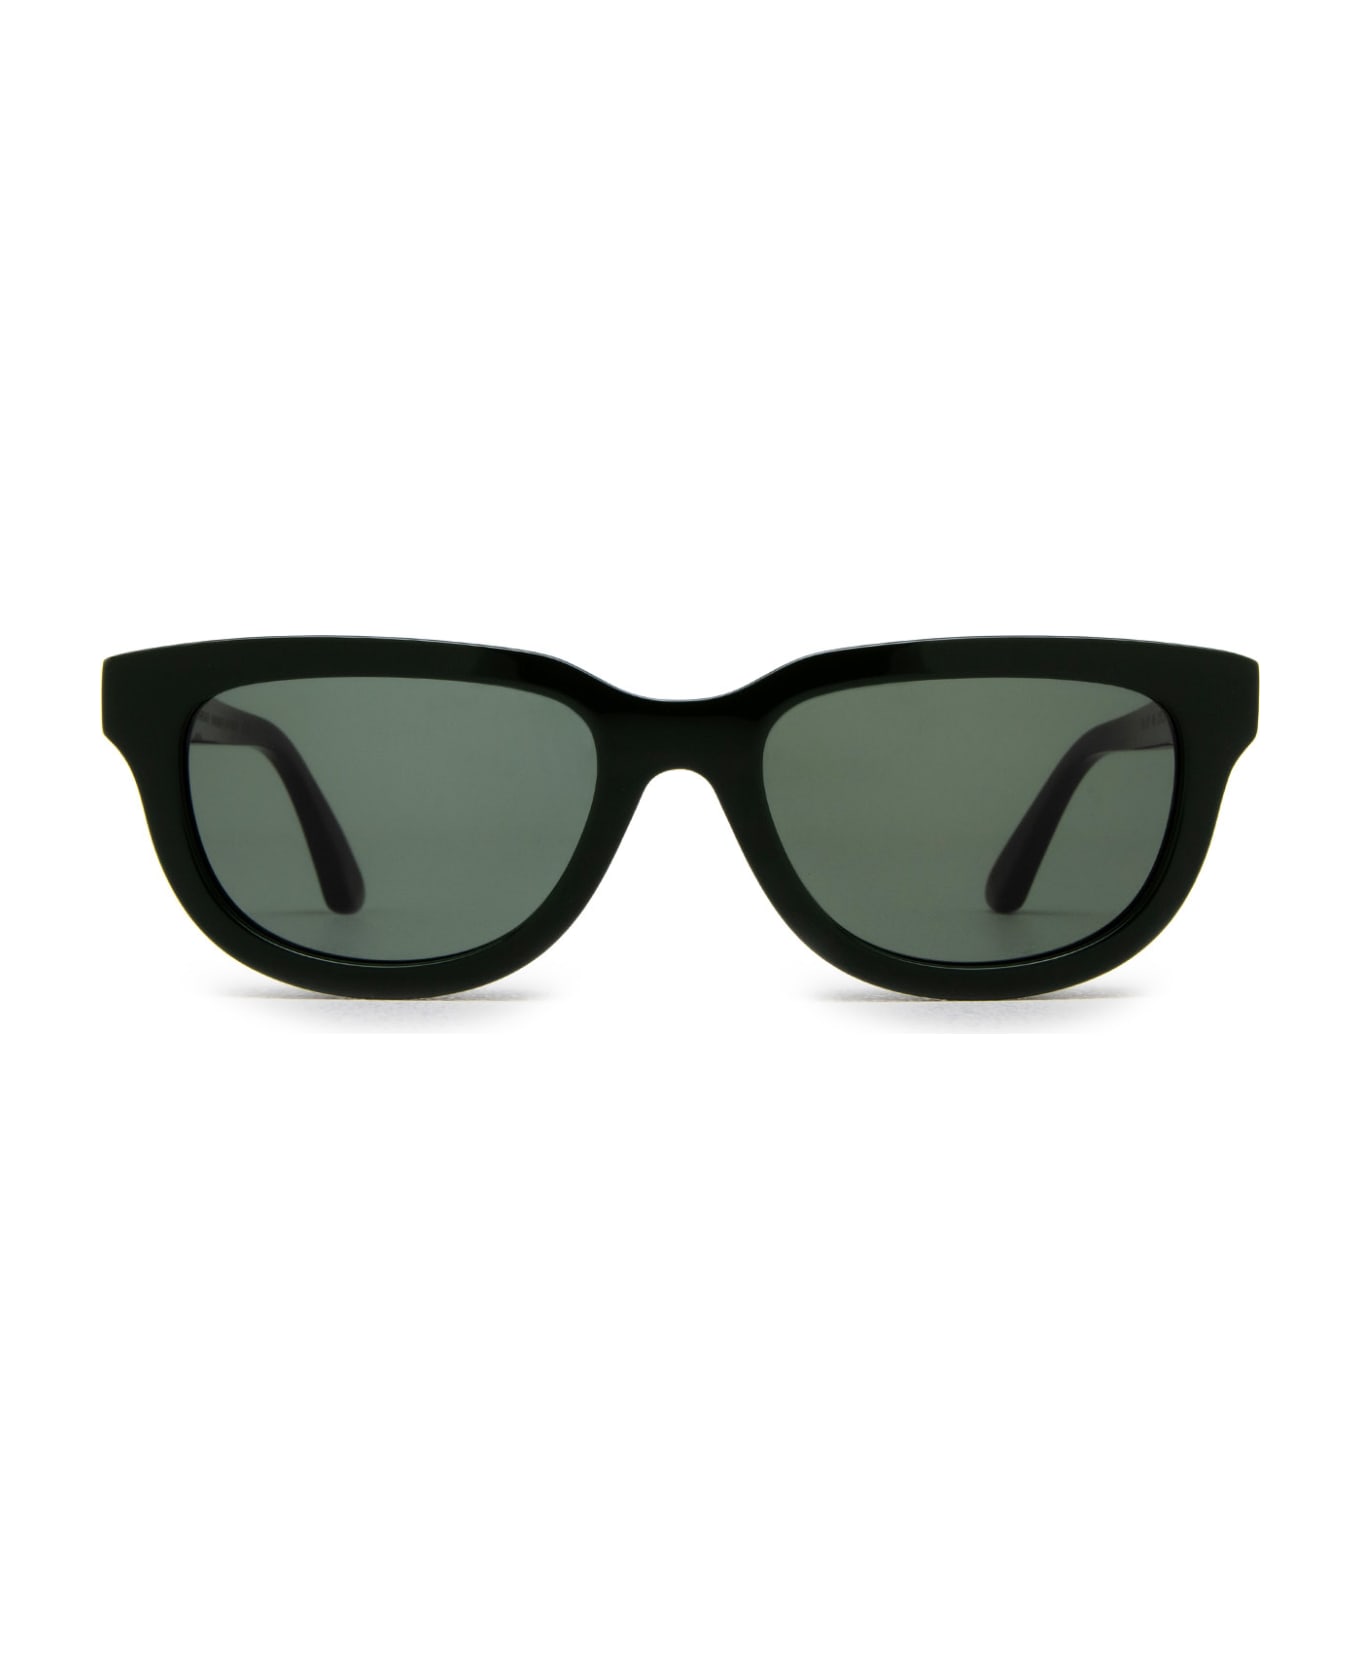 Huma Lion Green Sunglasses - Green